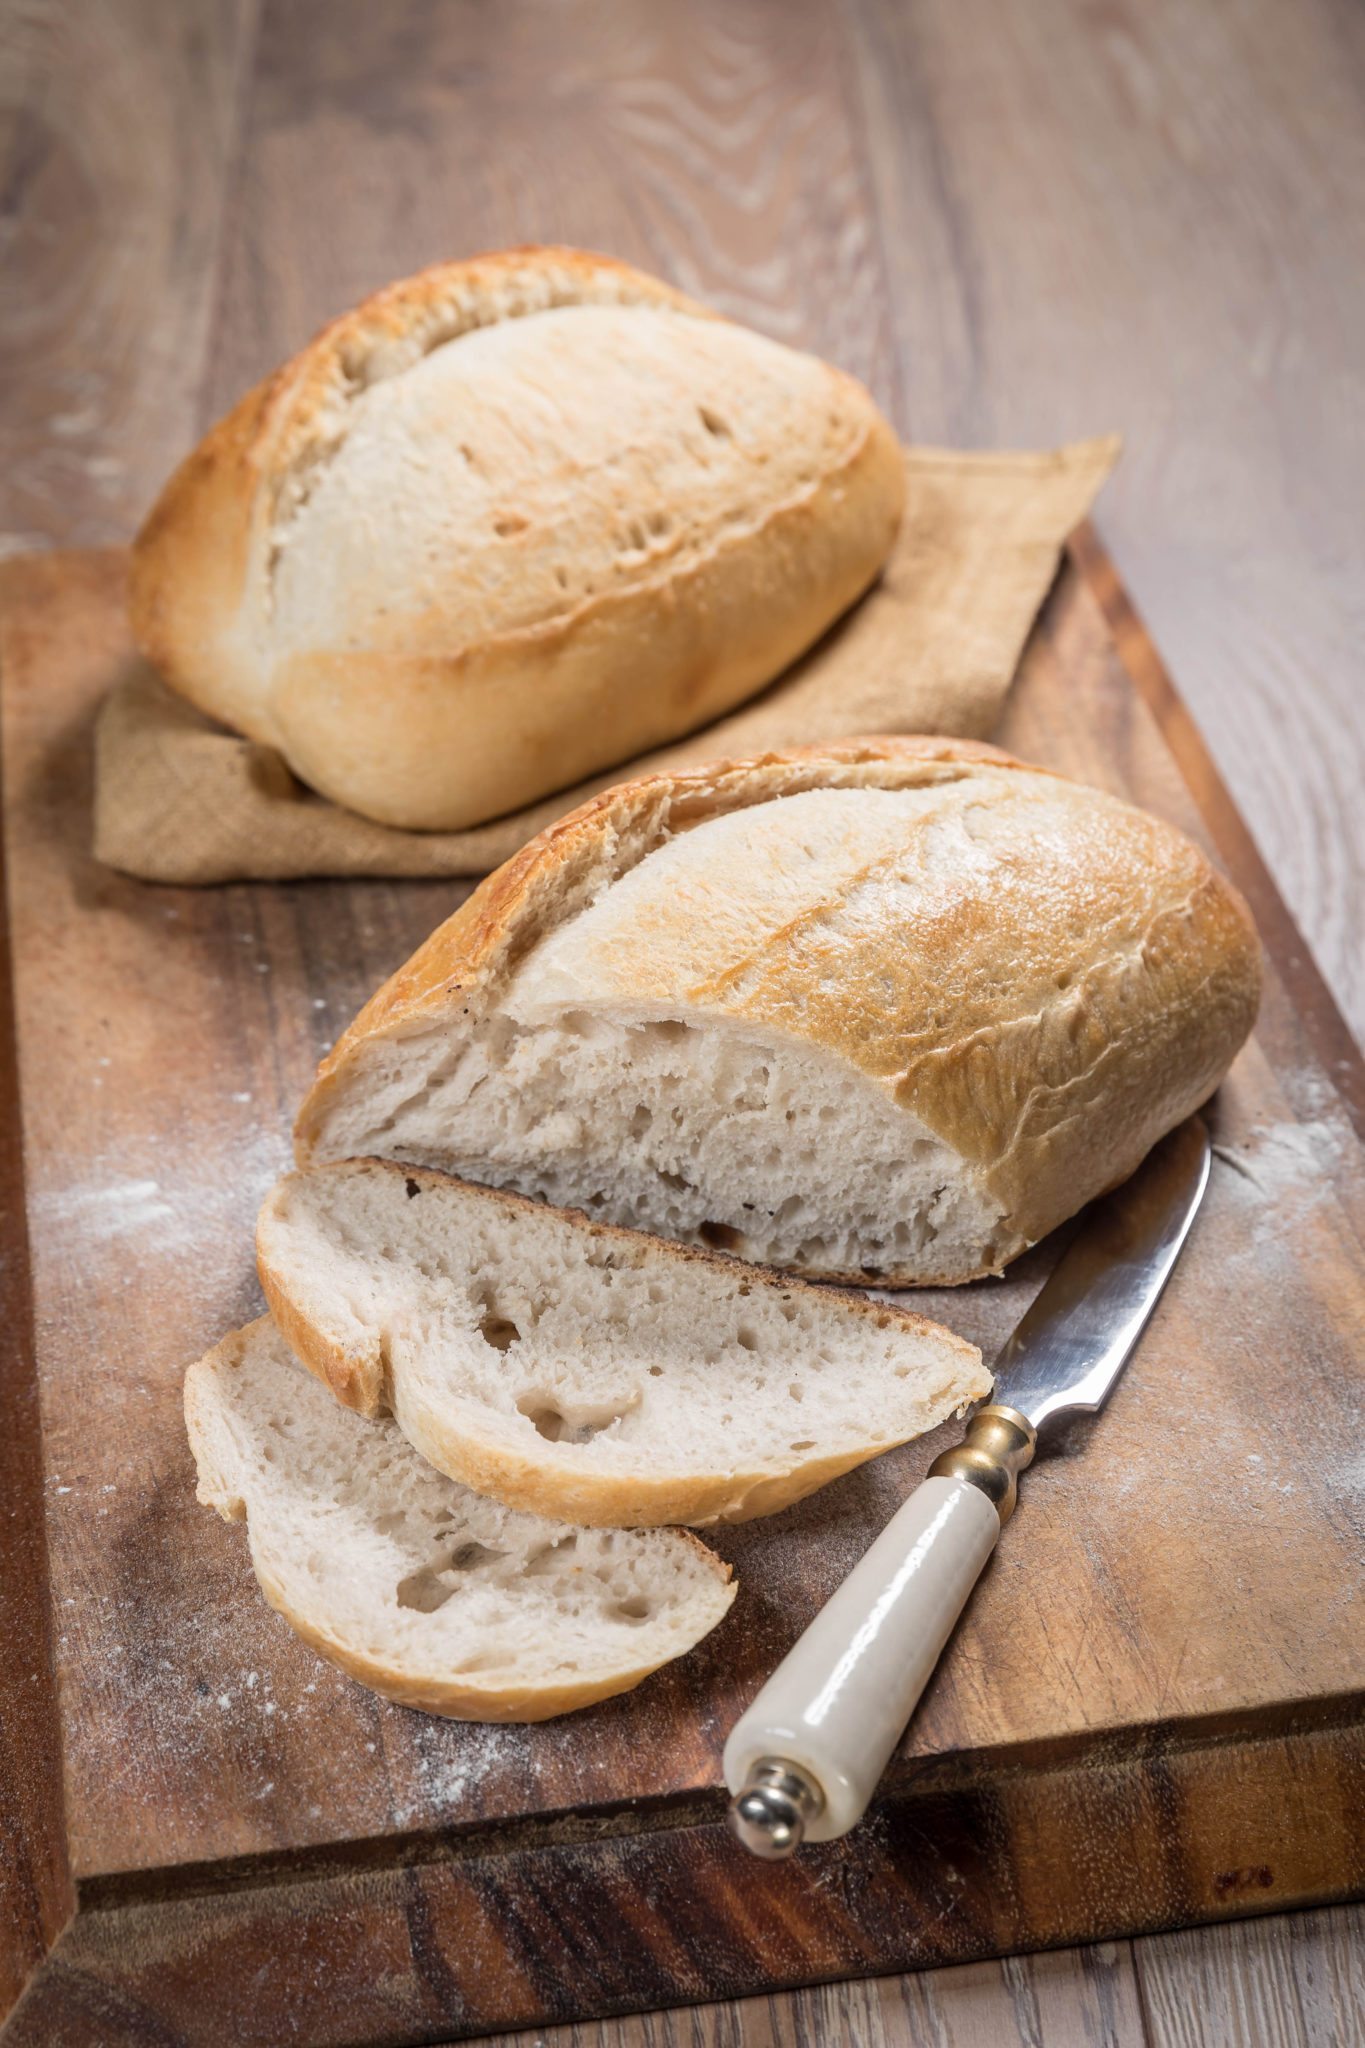 Cuisine de France’s Sourdough Bloomer aims to revitalise the sometimes negative impression of white bread